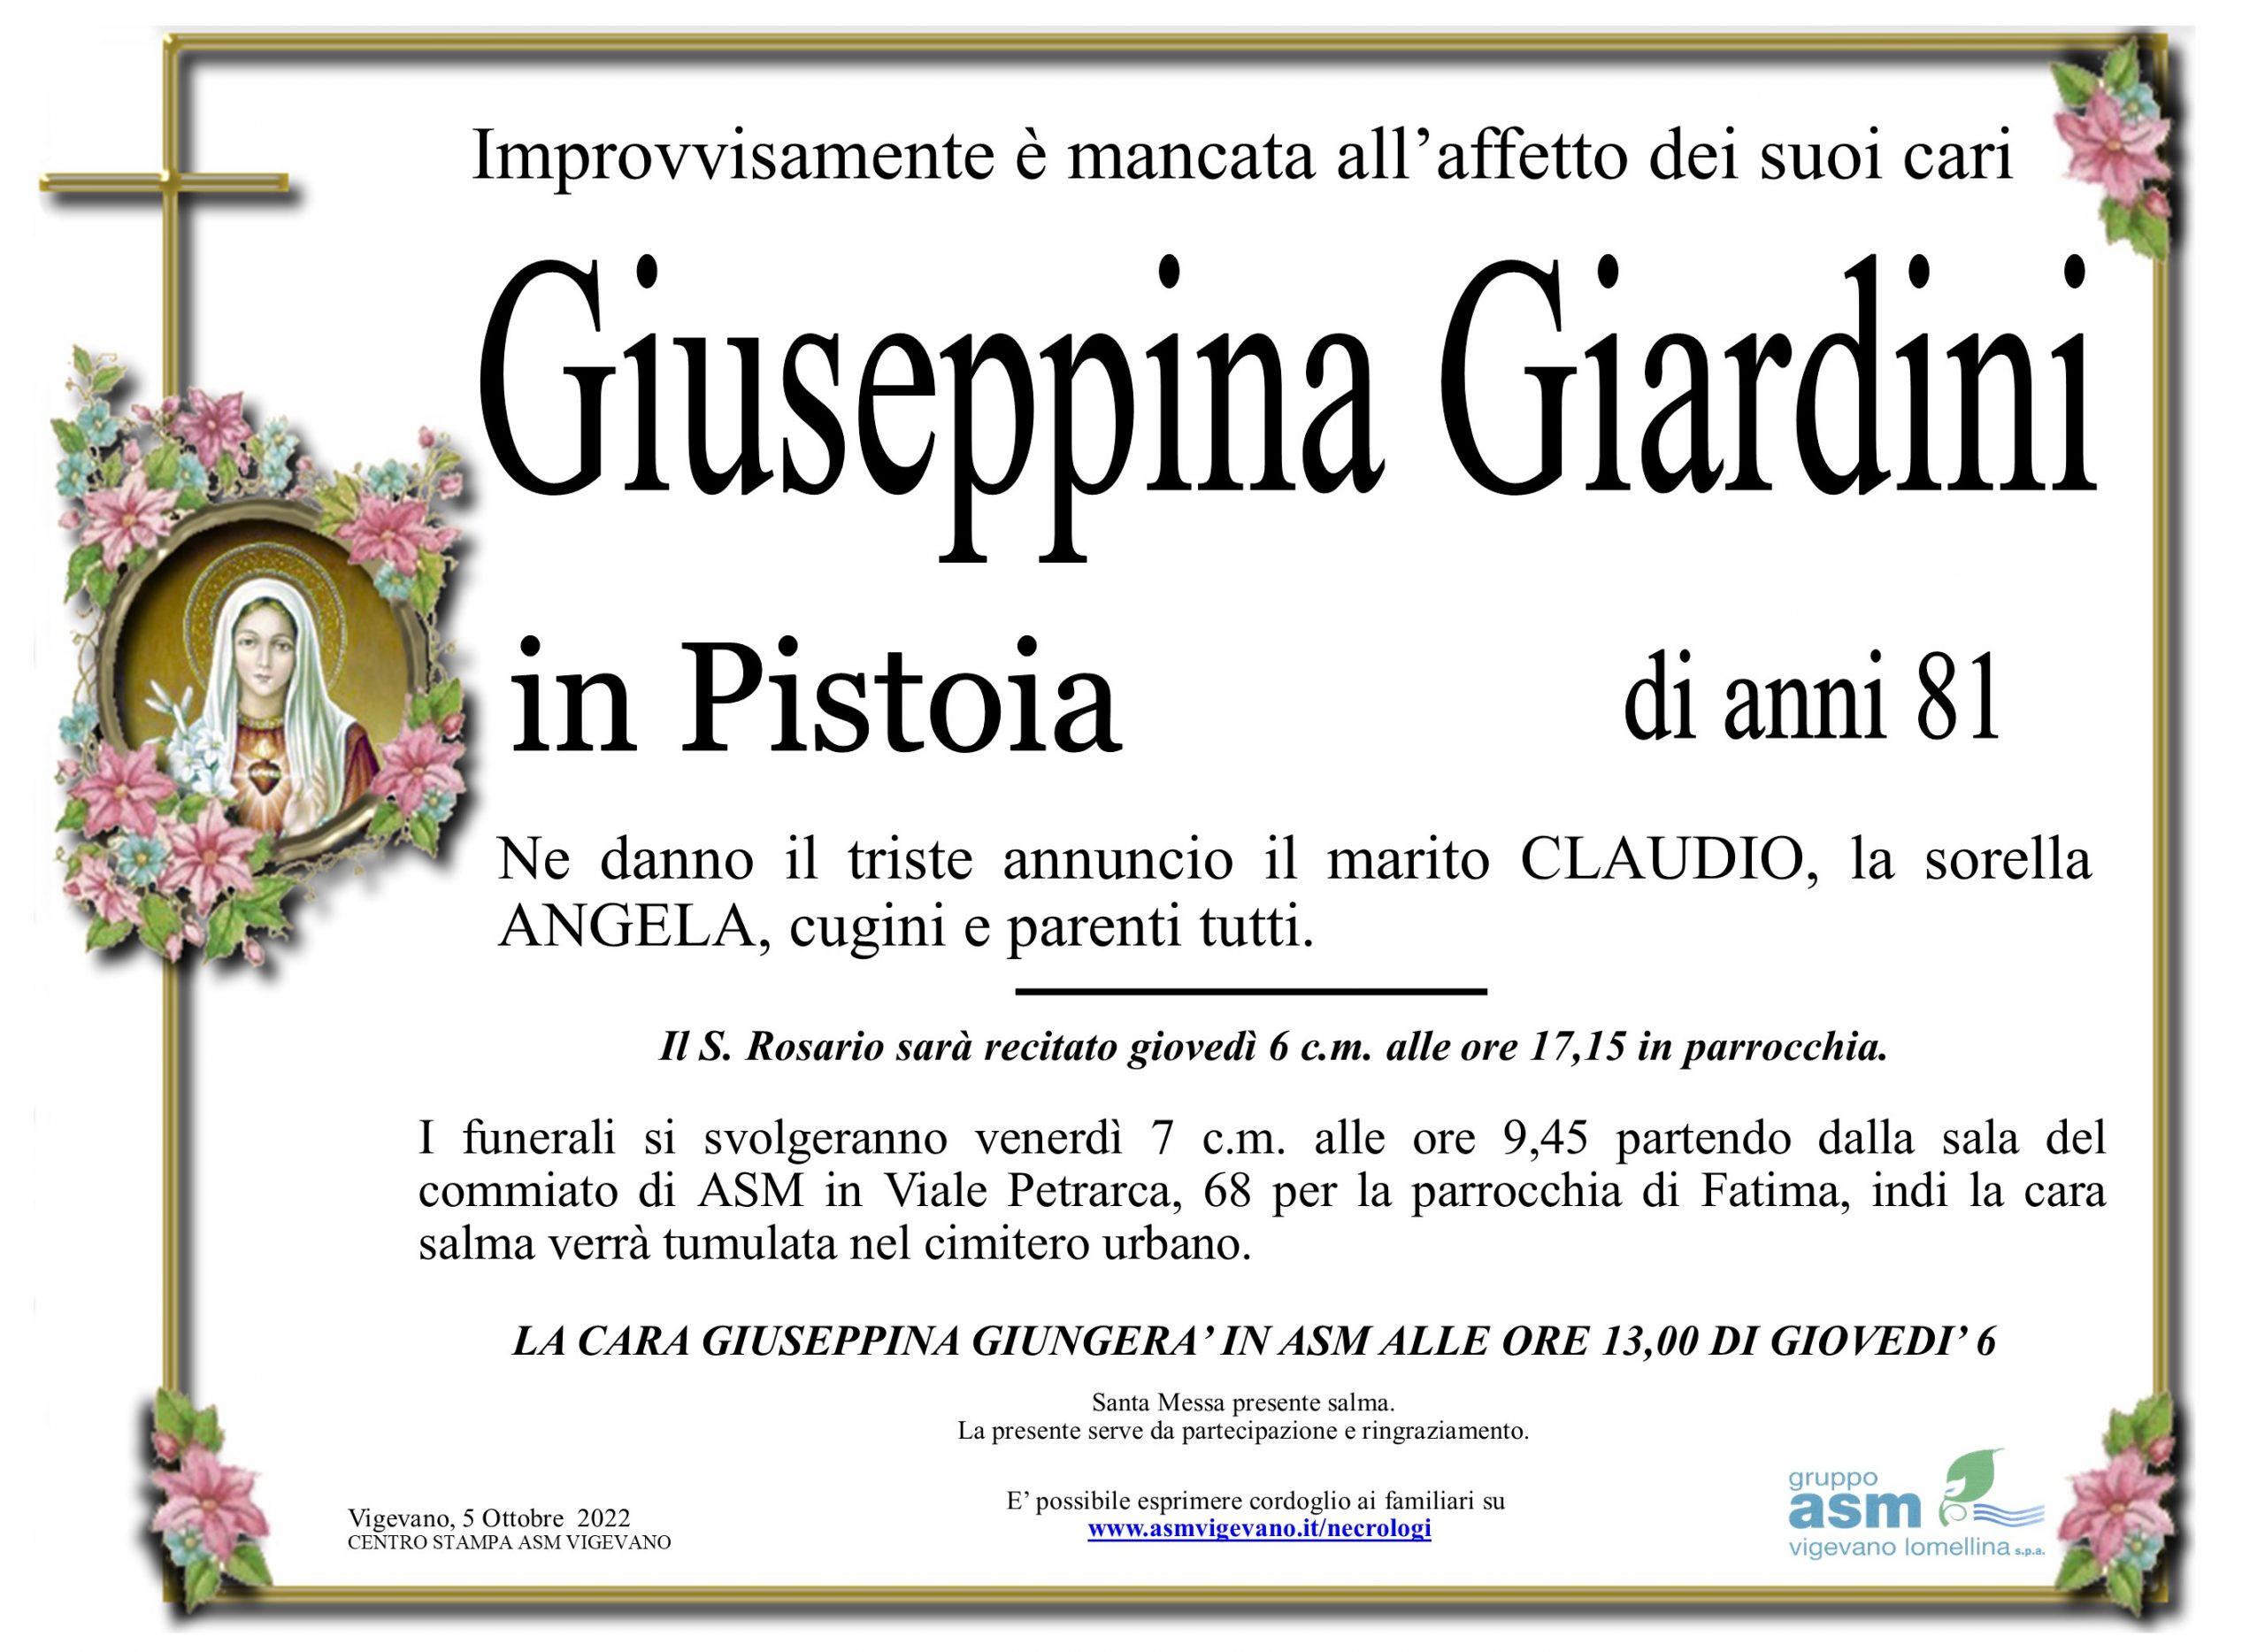 Giuseppina Giardini